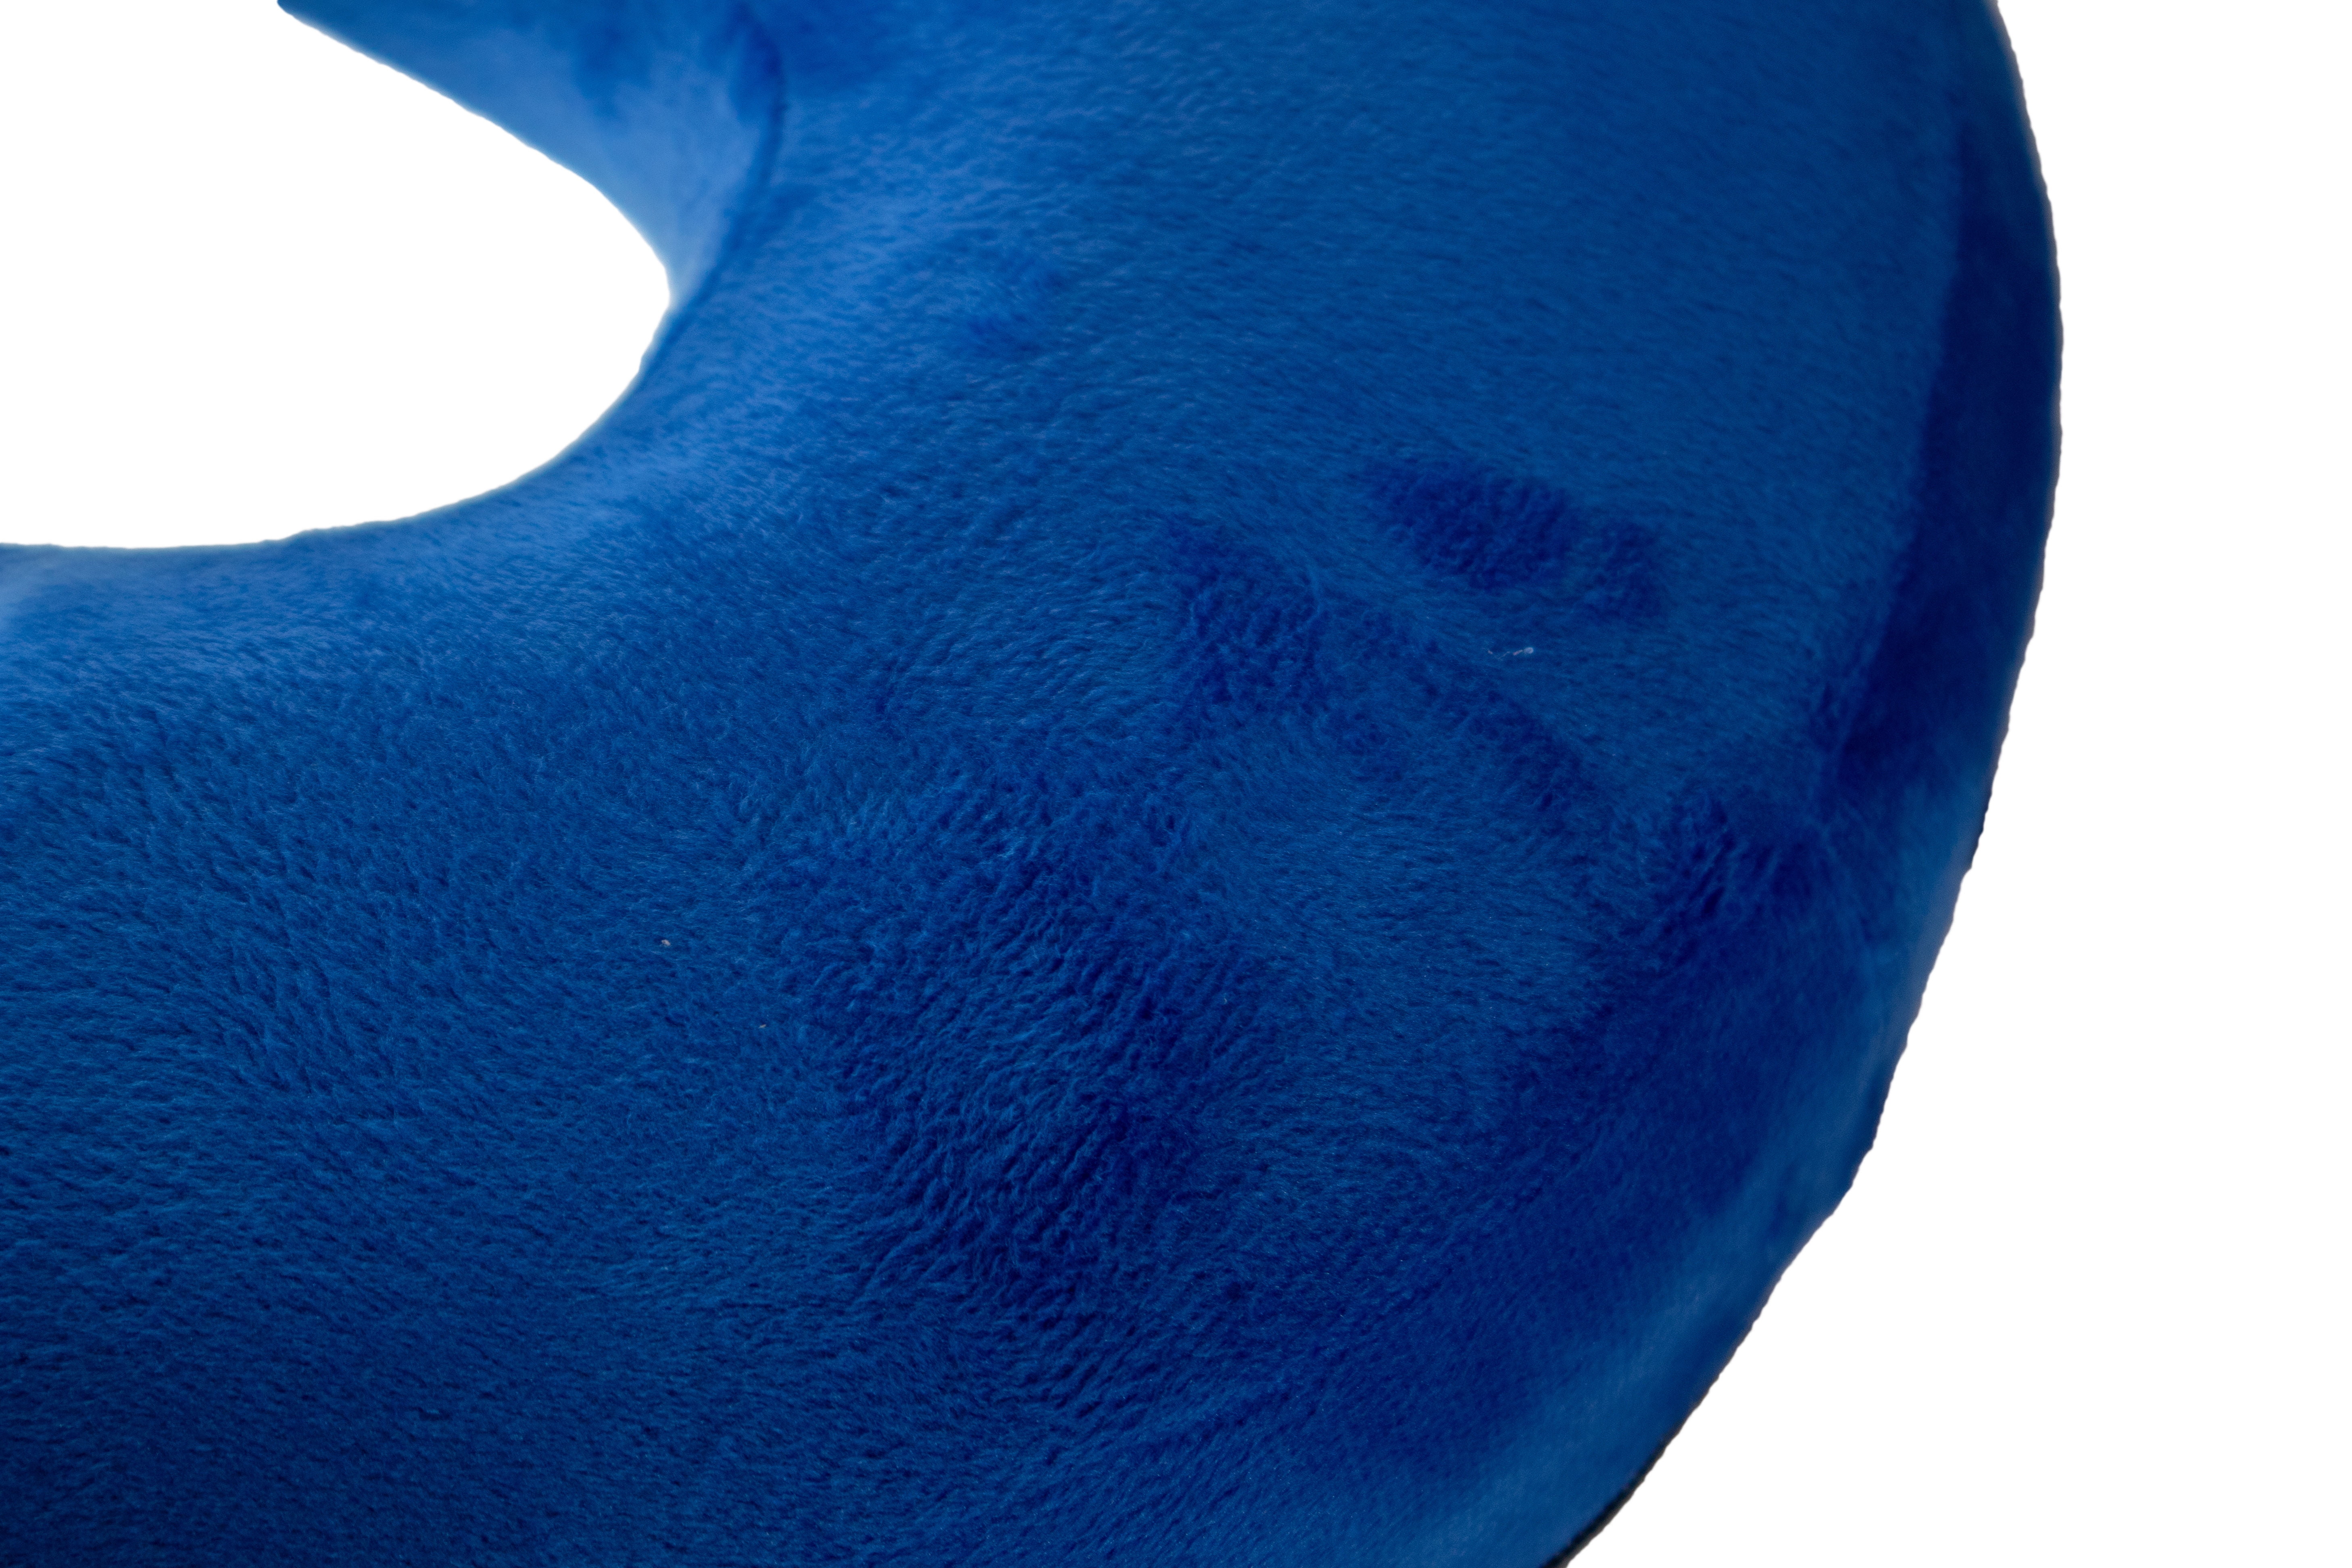 Orthopedic Donut Seat Cushion Memory Foam Cushion – Tailbone & Coccyx  Memory Foam Pillow - Pain Relief & Relieves Tailbone Pressure - Light Brown